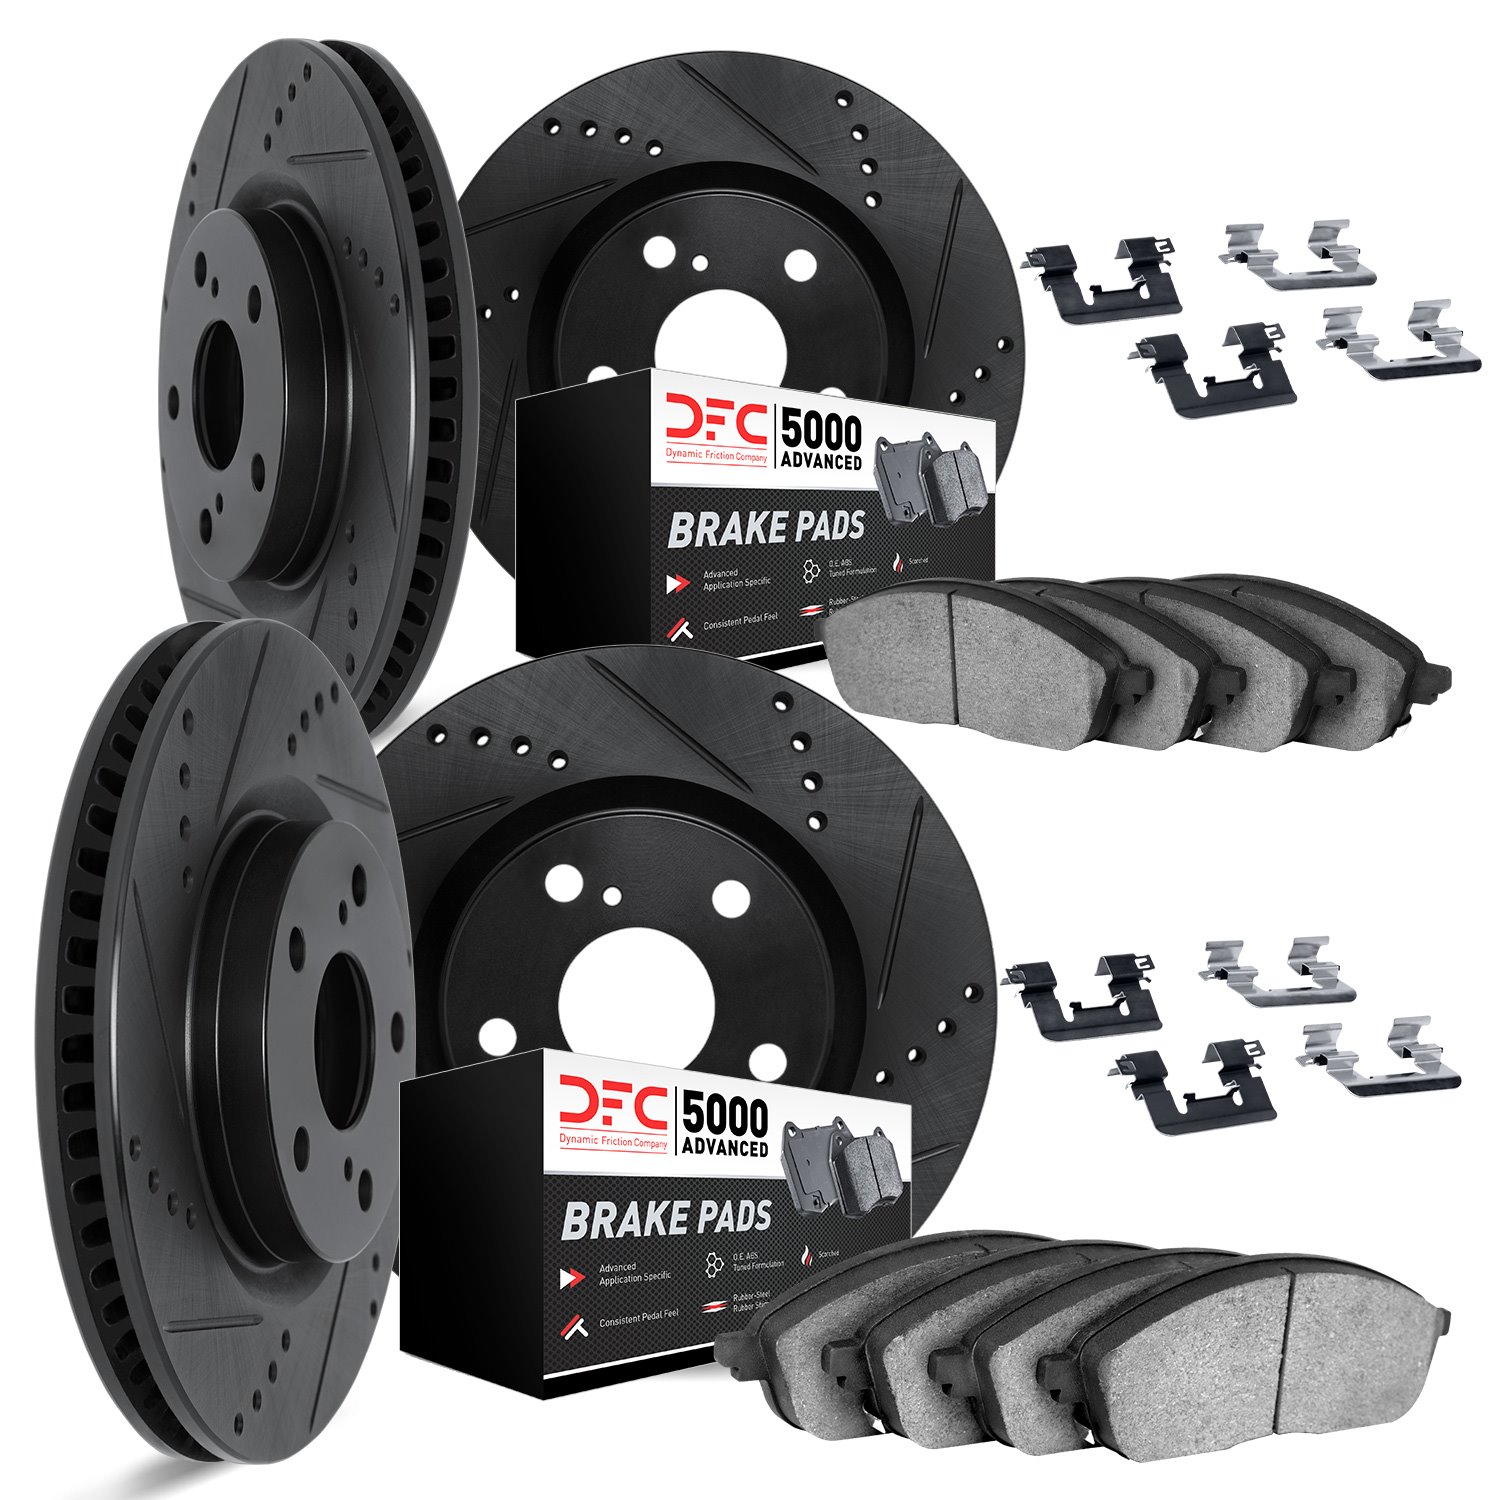 8514-40263 Drilled/Slotted Brake Rotors w/5000 Advanced Brake Pads Kit & Hardware [Black], 2008-2012 Mopar, Position: Front and